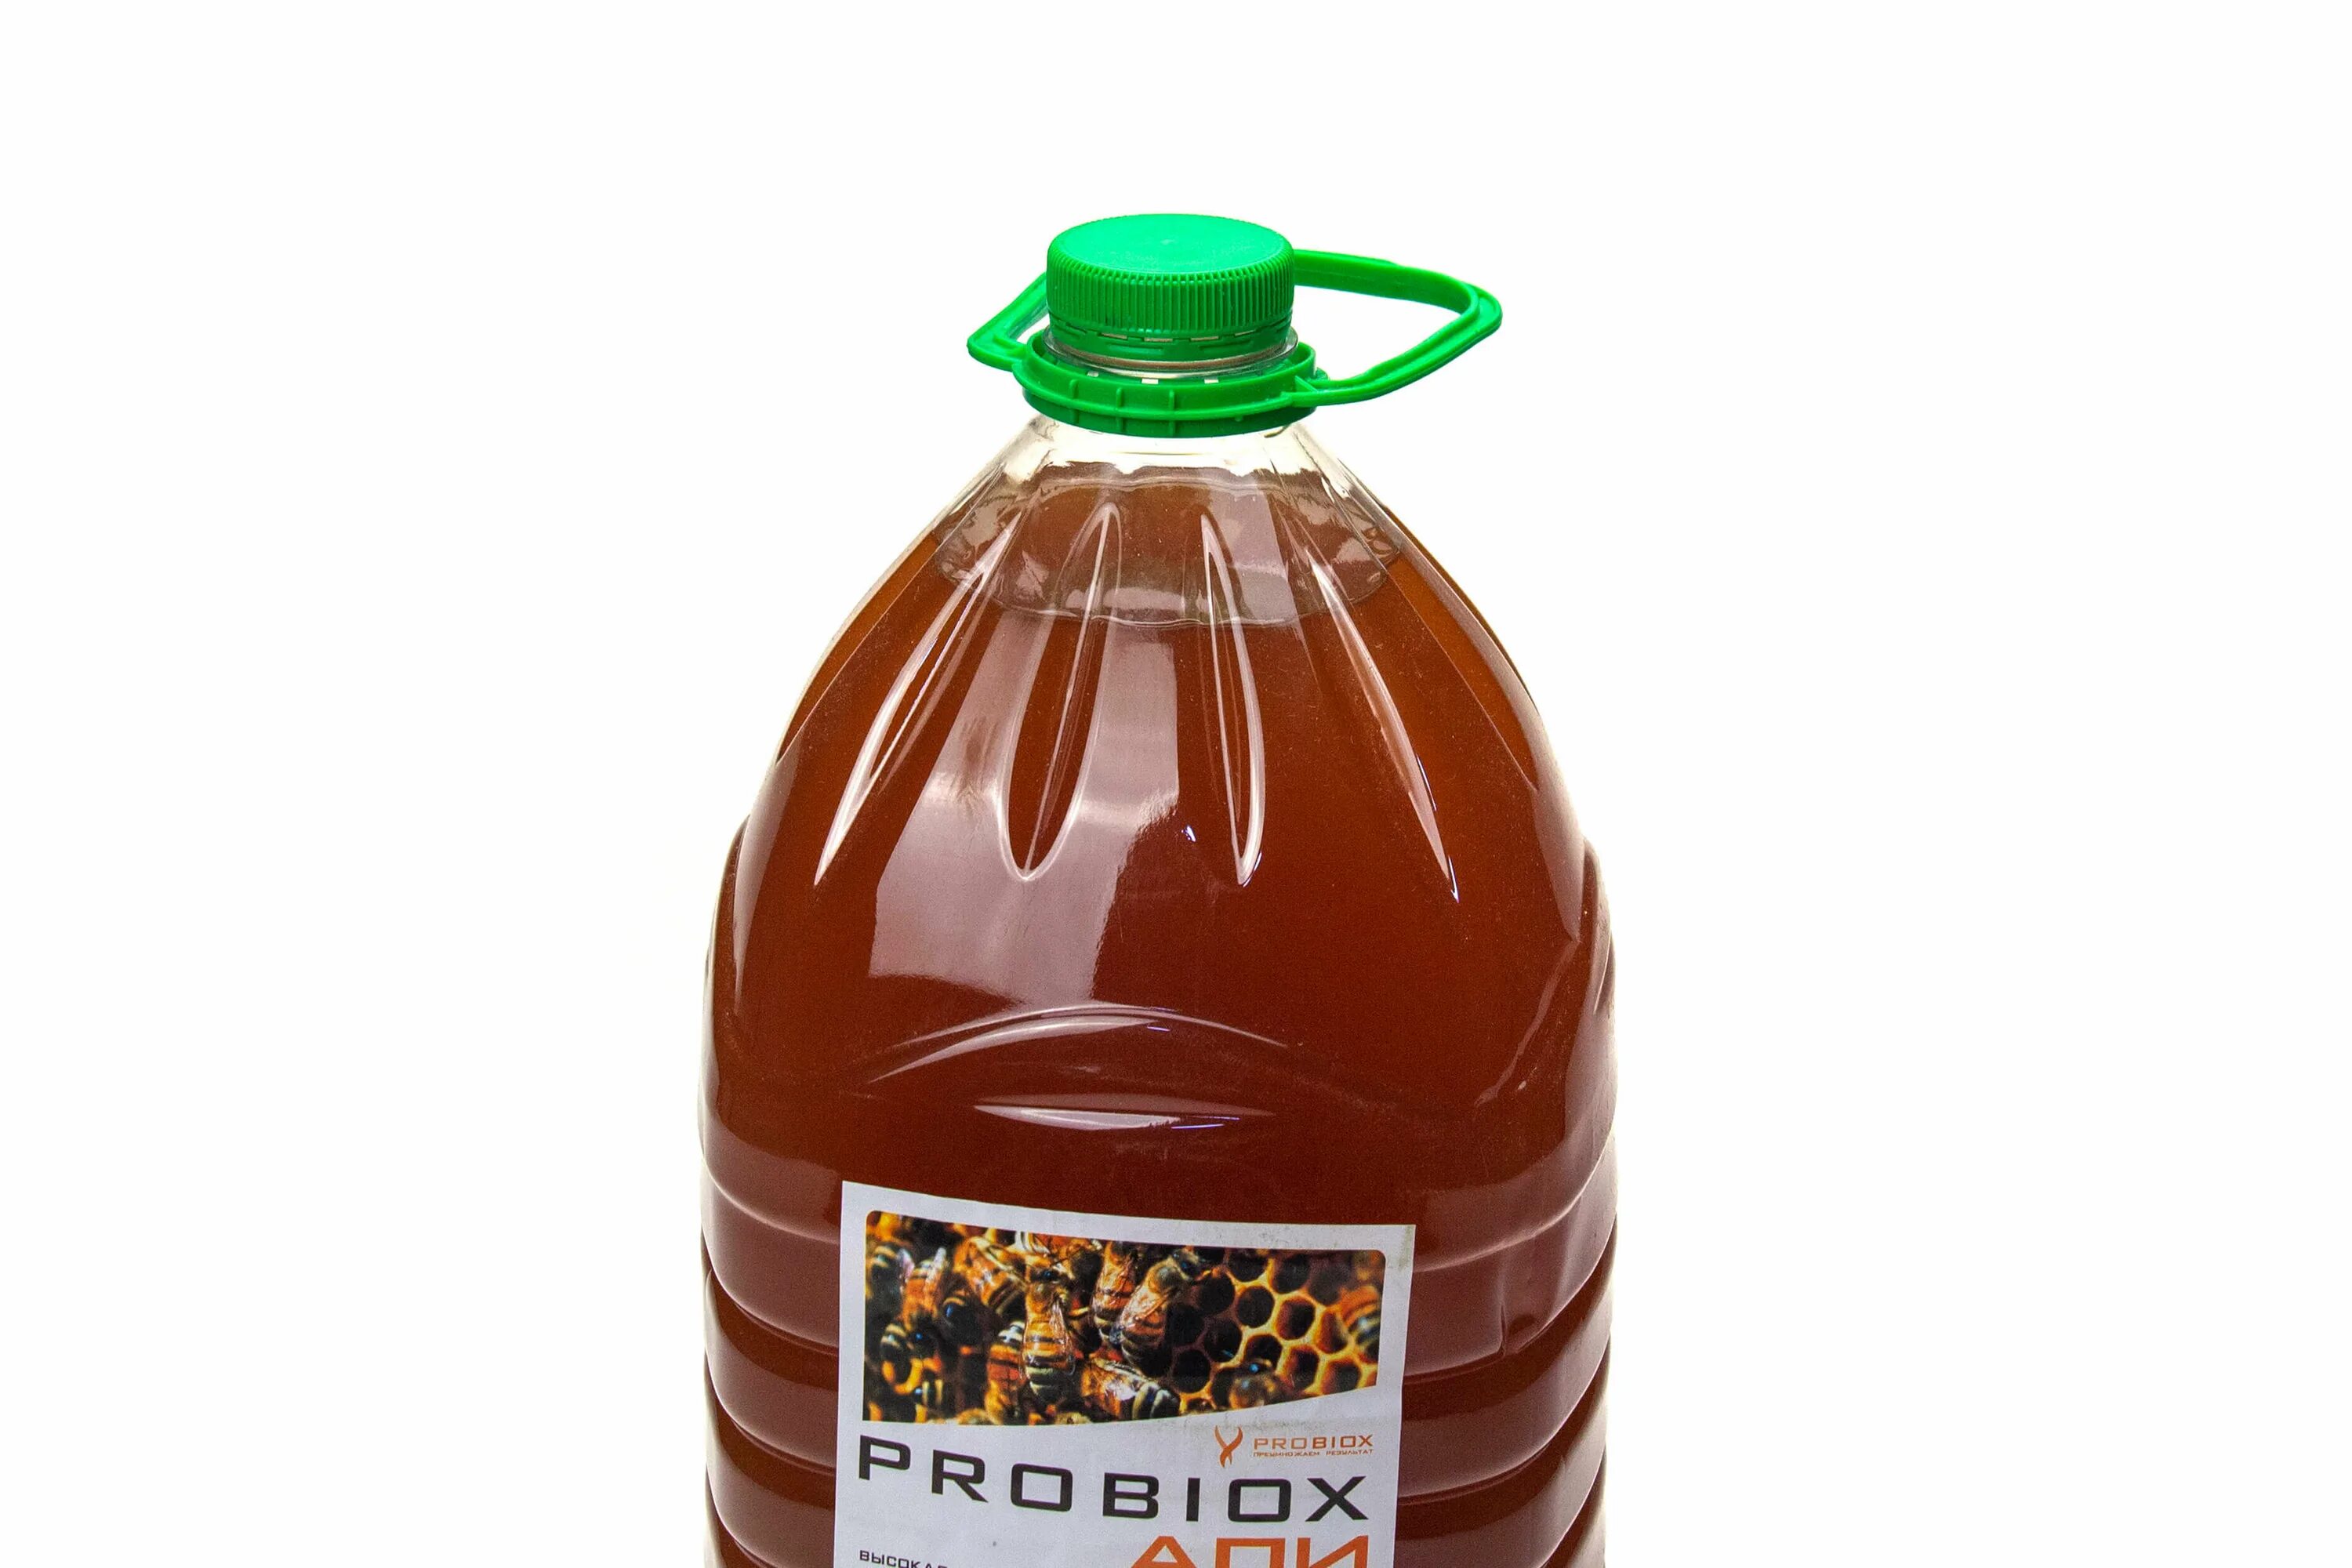 Пробиокс апи. Probiox АПИ. Пробиокс АПИ для пчел. Пробиокс Экстра капсулы. Пробиокс для пчел аналоги.